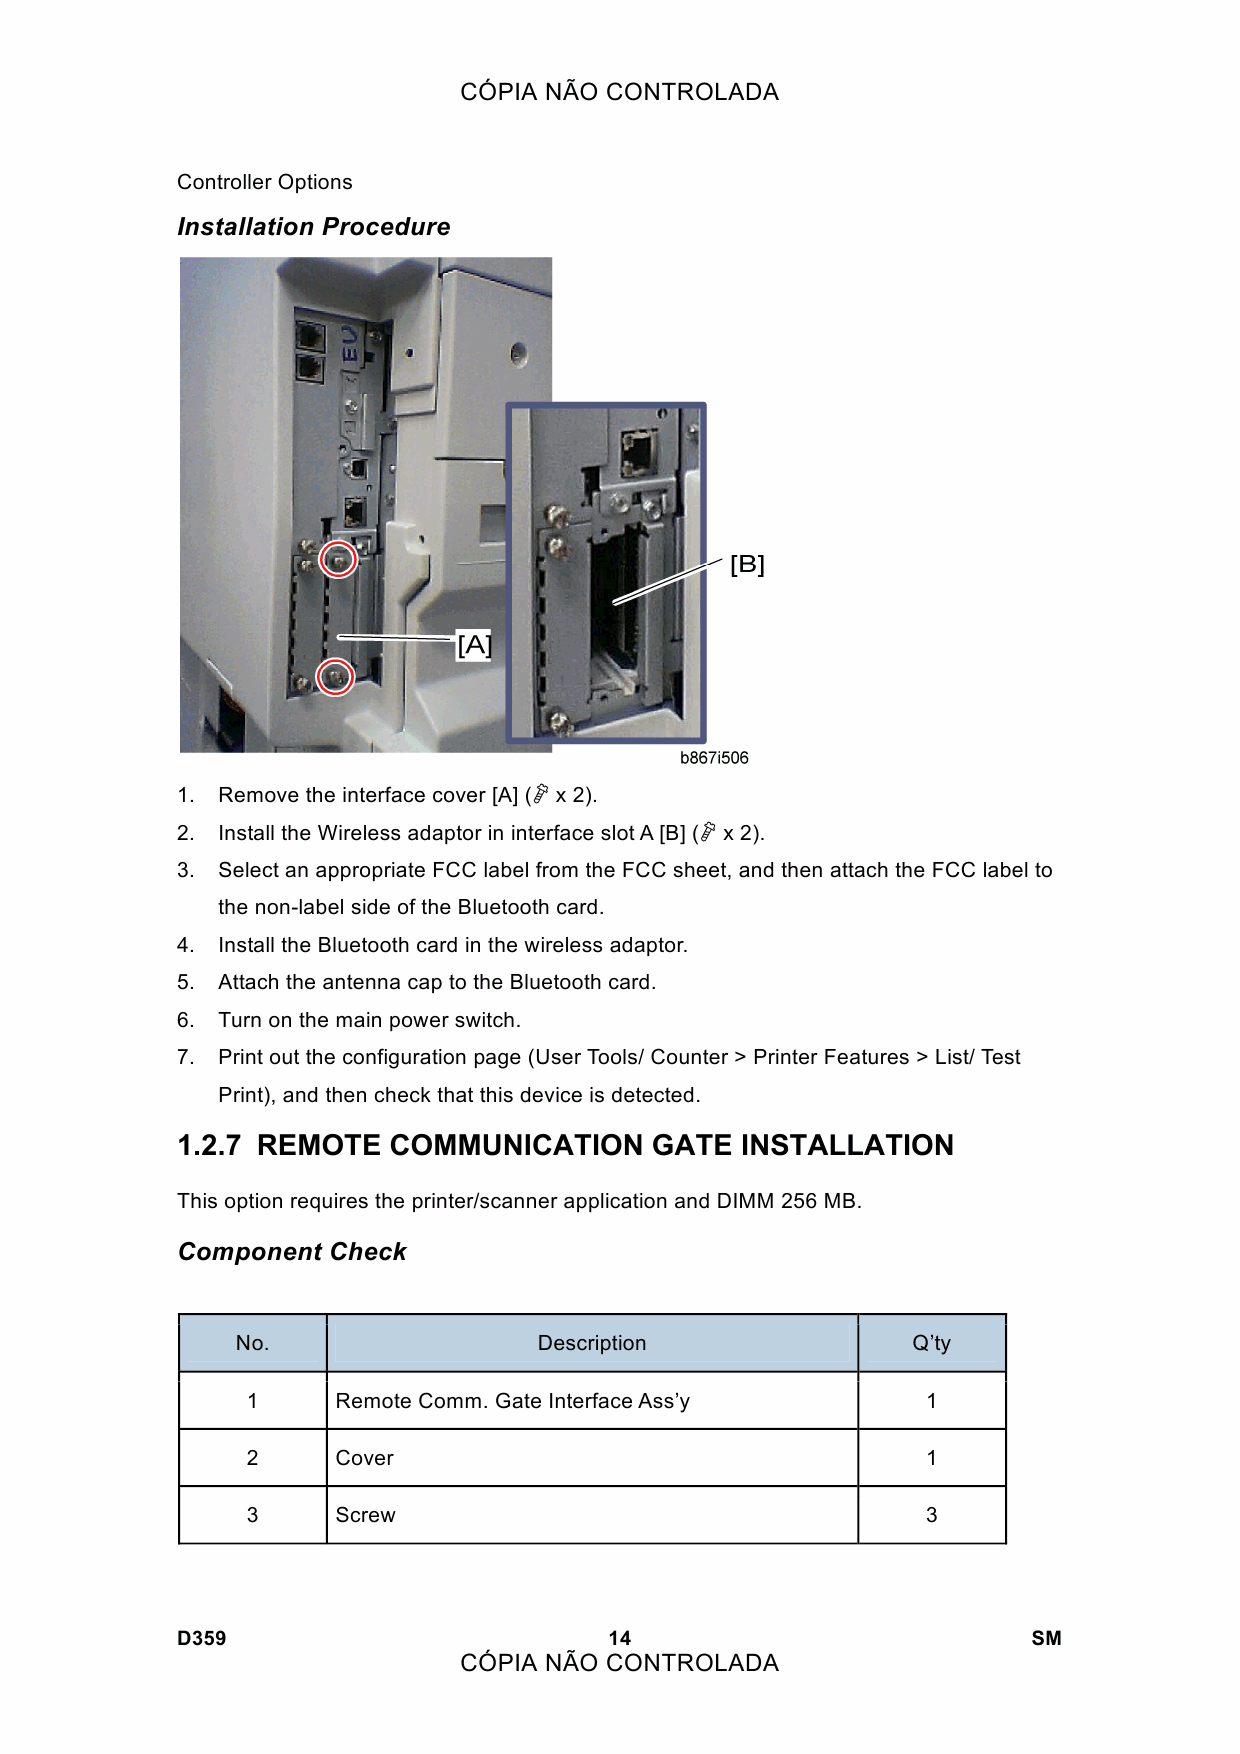 RICOH Aficio MP-2500 D010 Service Manual-6